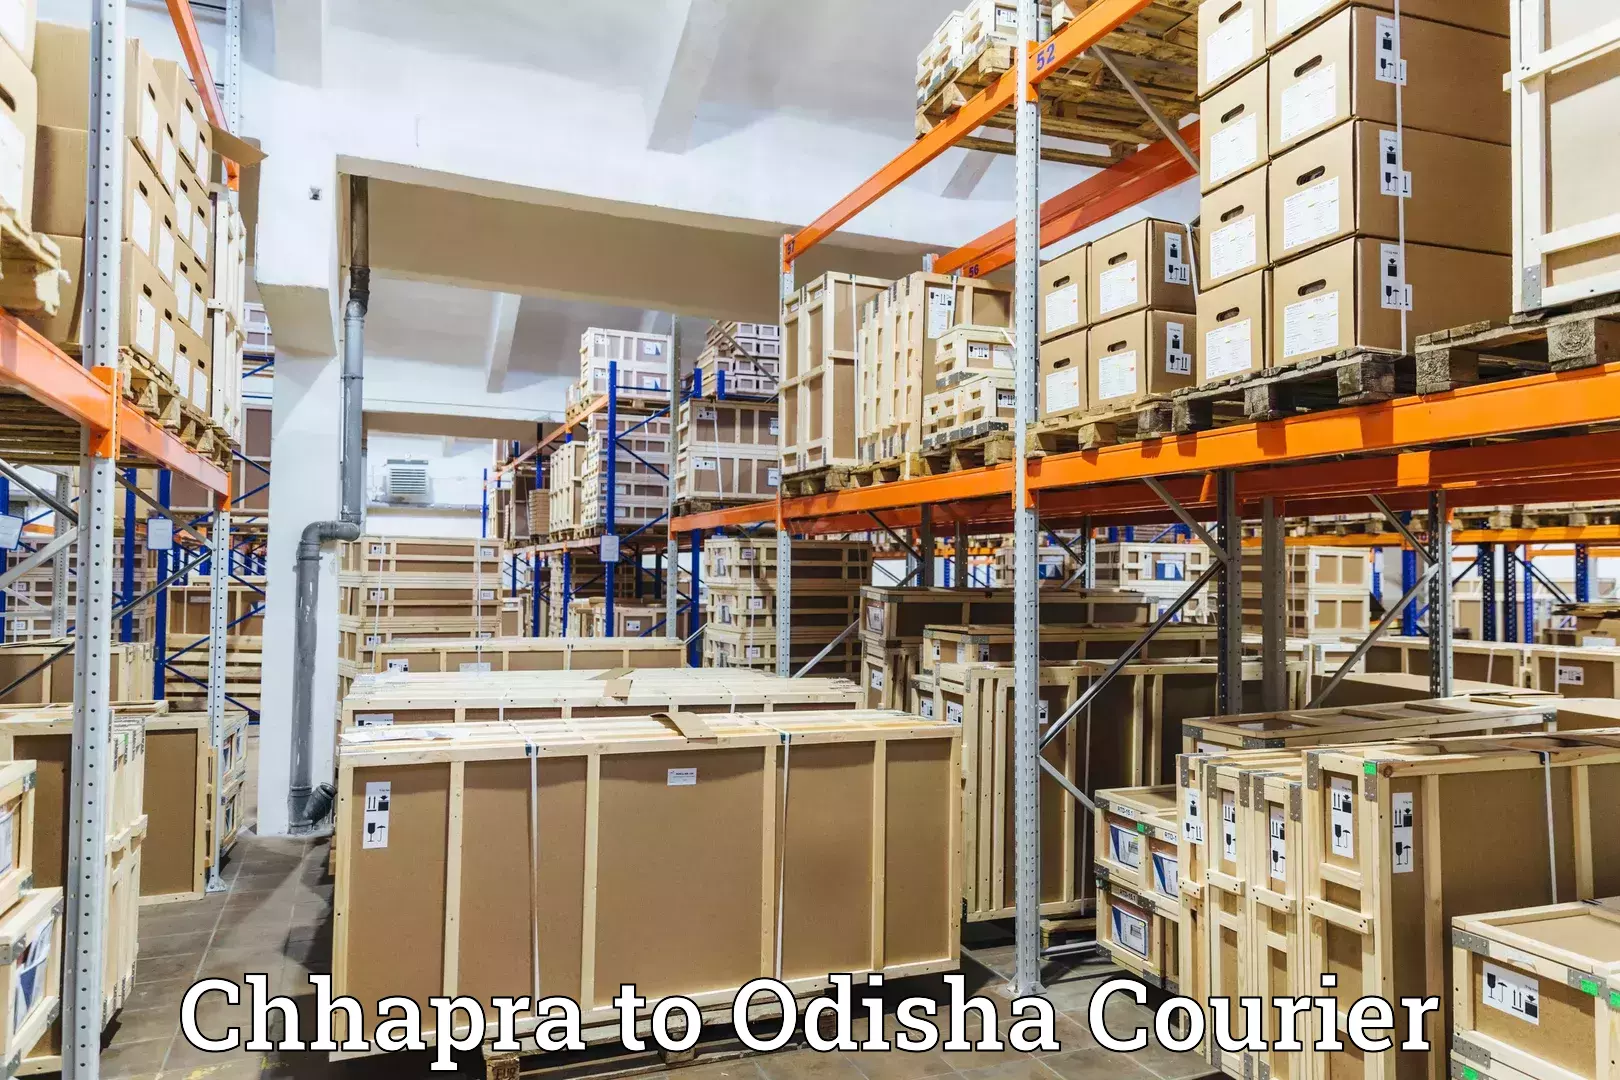 Express delivery capabilities Chhapra to Odisha